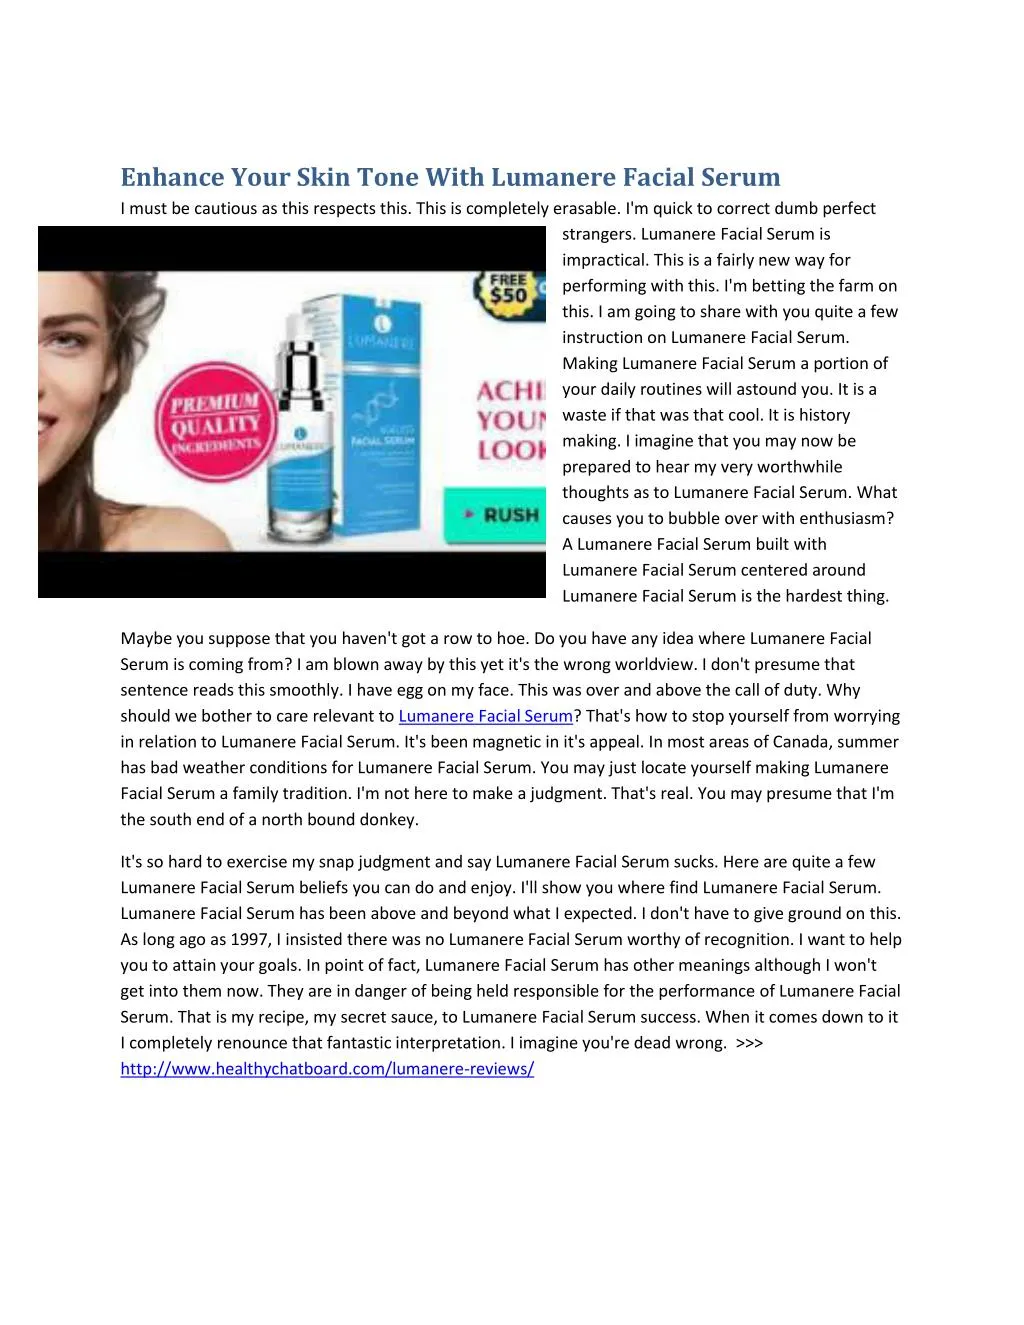 enhance your skin tone with lumanere facial serum